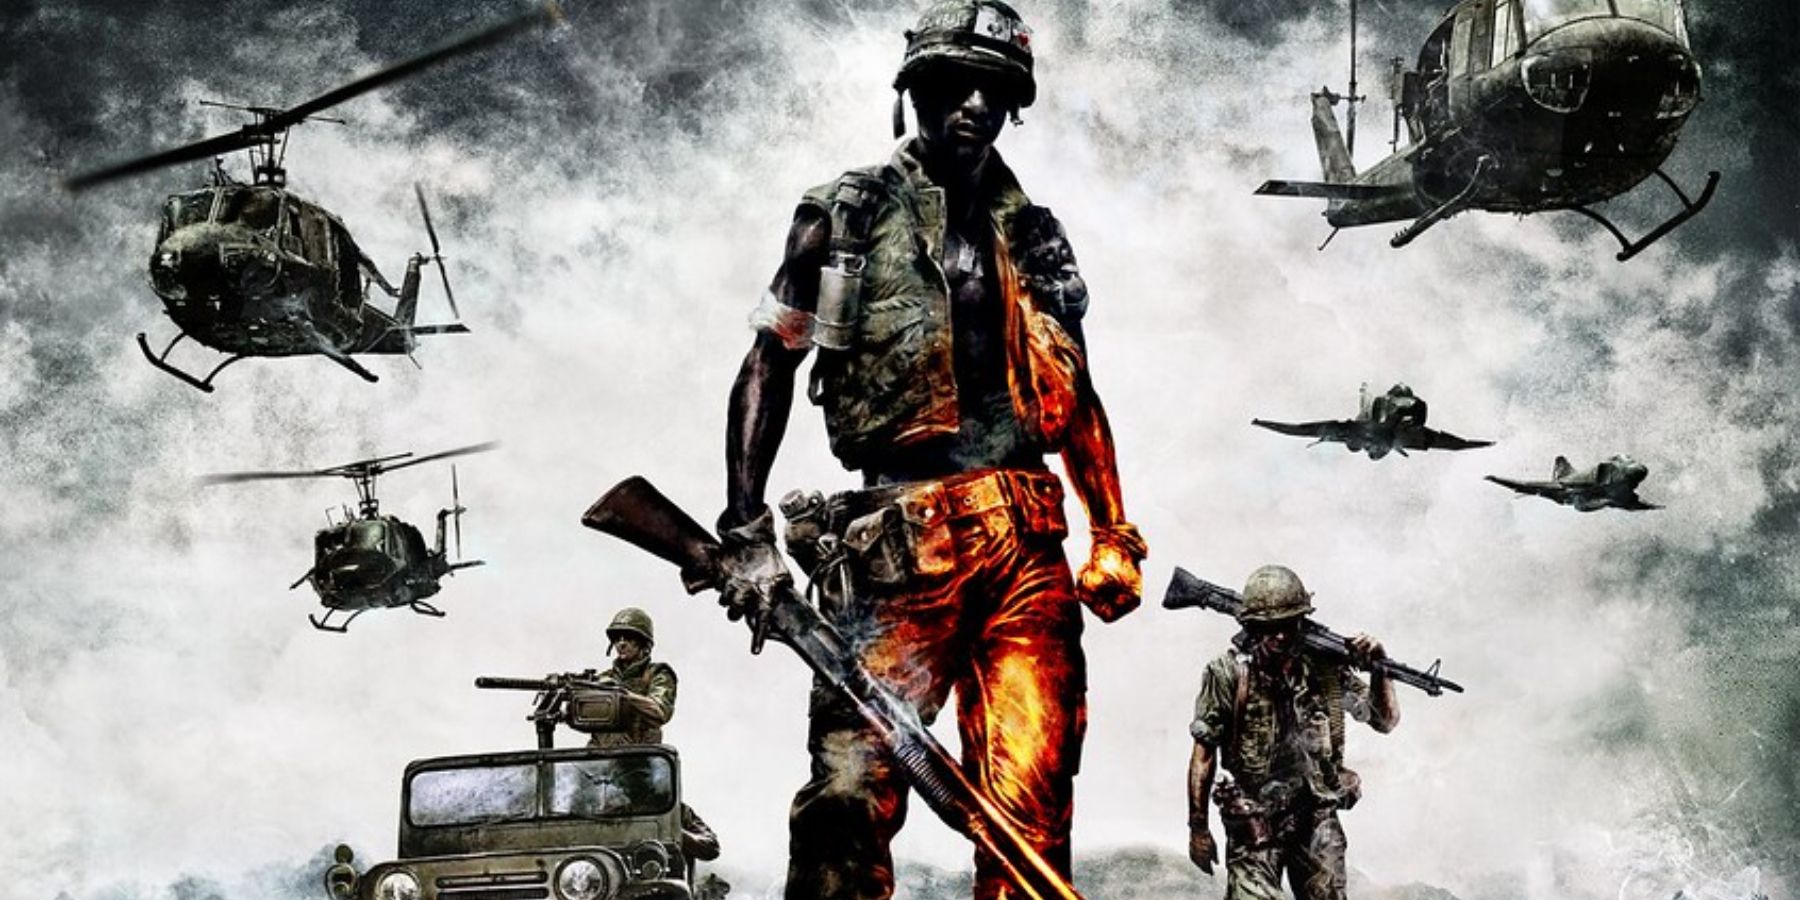 Battlefield Bad Company 2 Vietnam